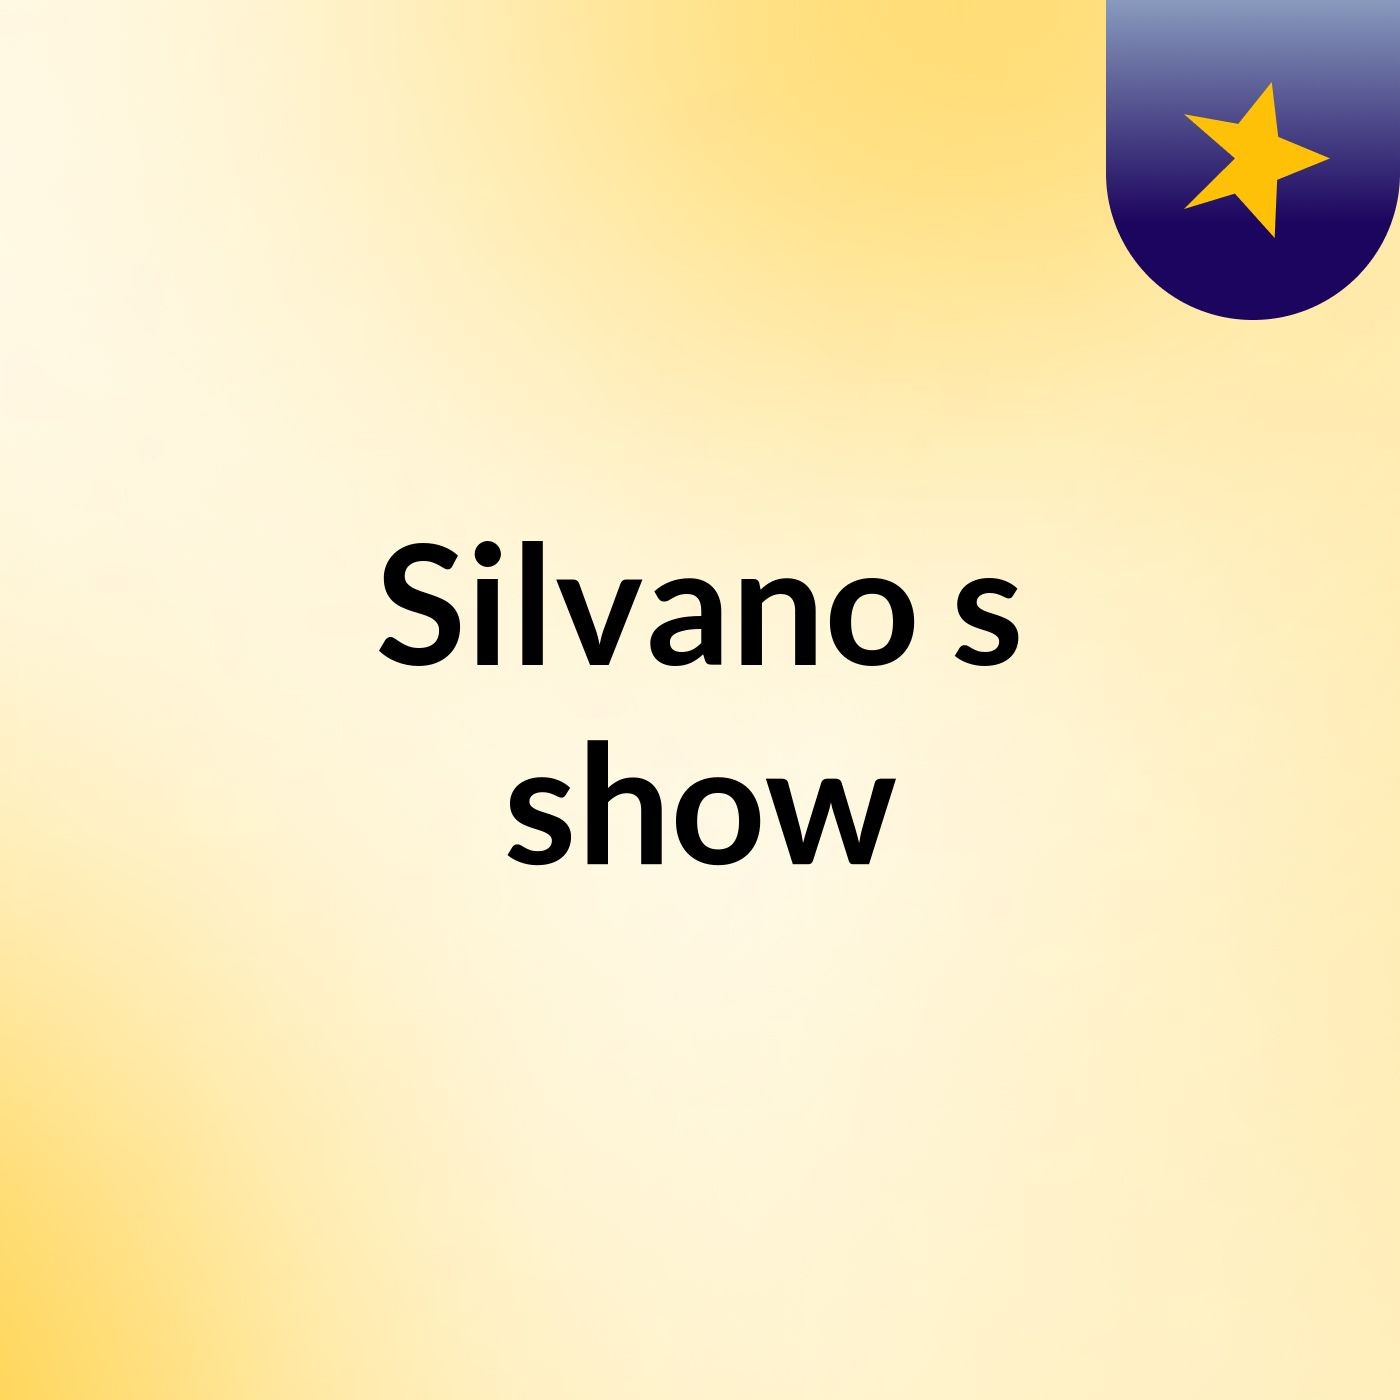 Silvano's show